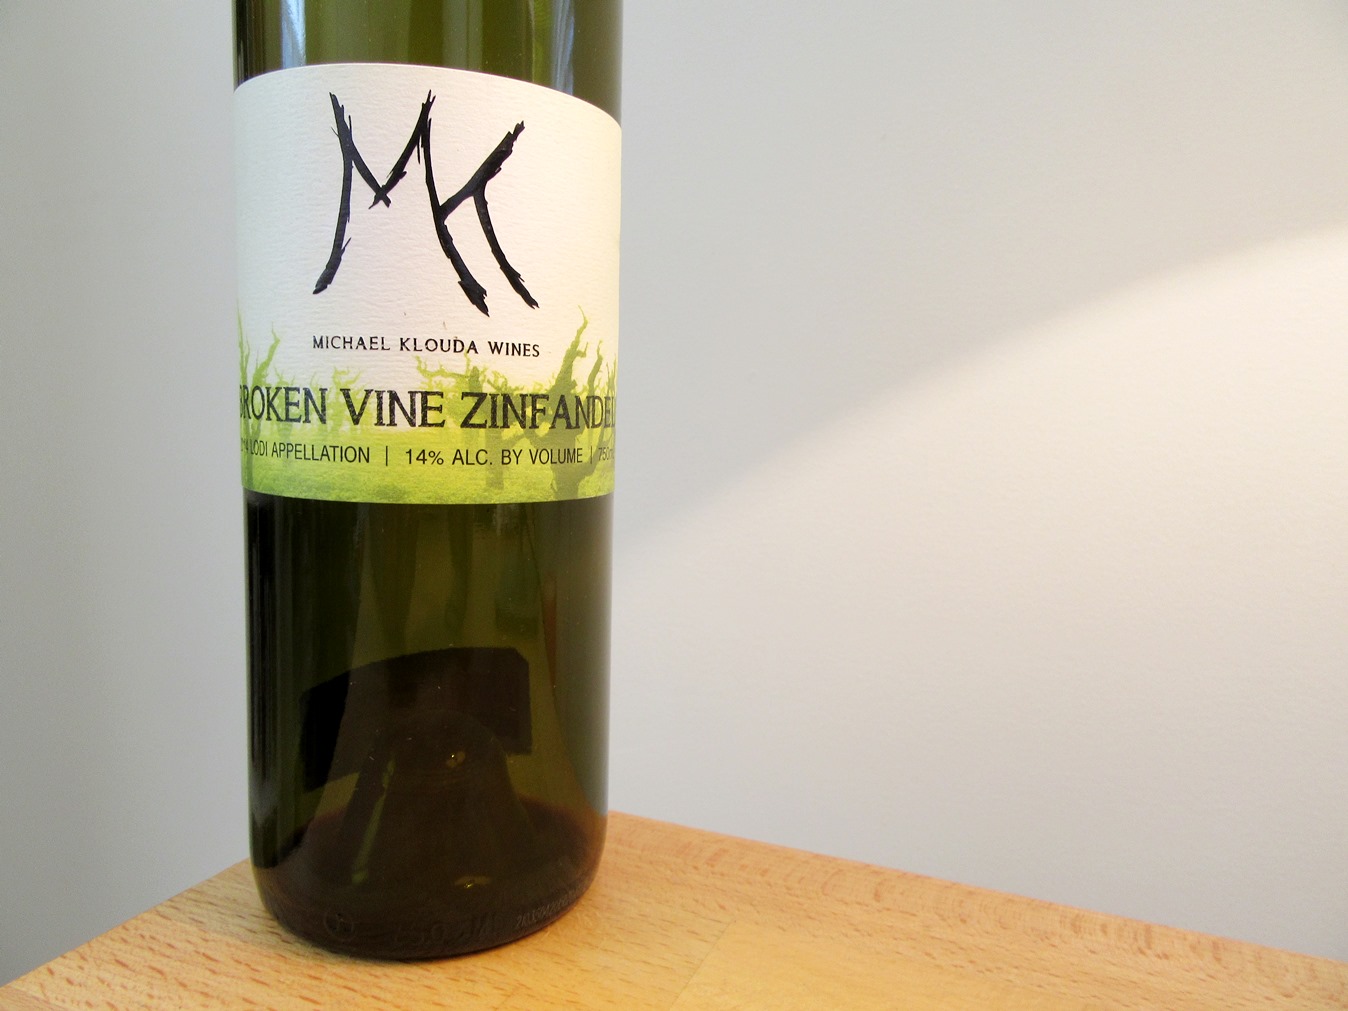 Michael Klouda Wines, Broken Vine Zinfandel 2014, Lodi, California, Wine Casual